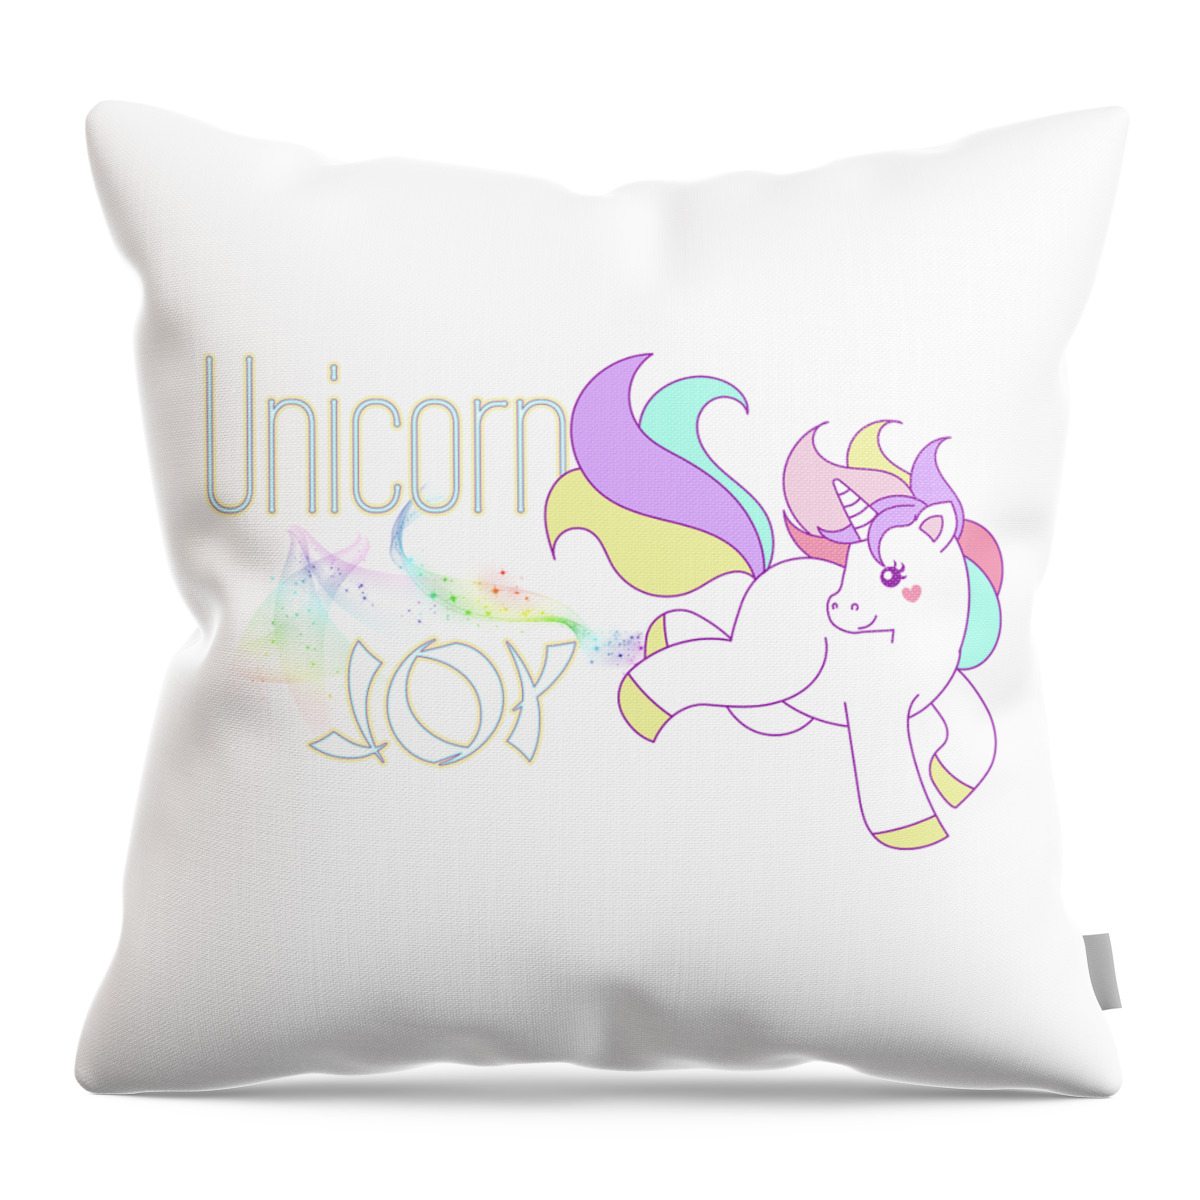 Unicorn Throw Pillow featuring the digital art Unicorn Joy by Tanya Owens